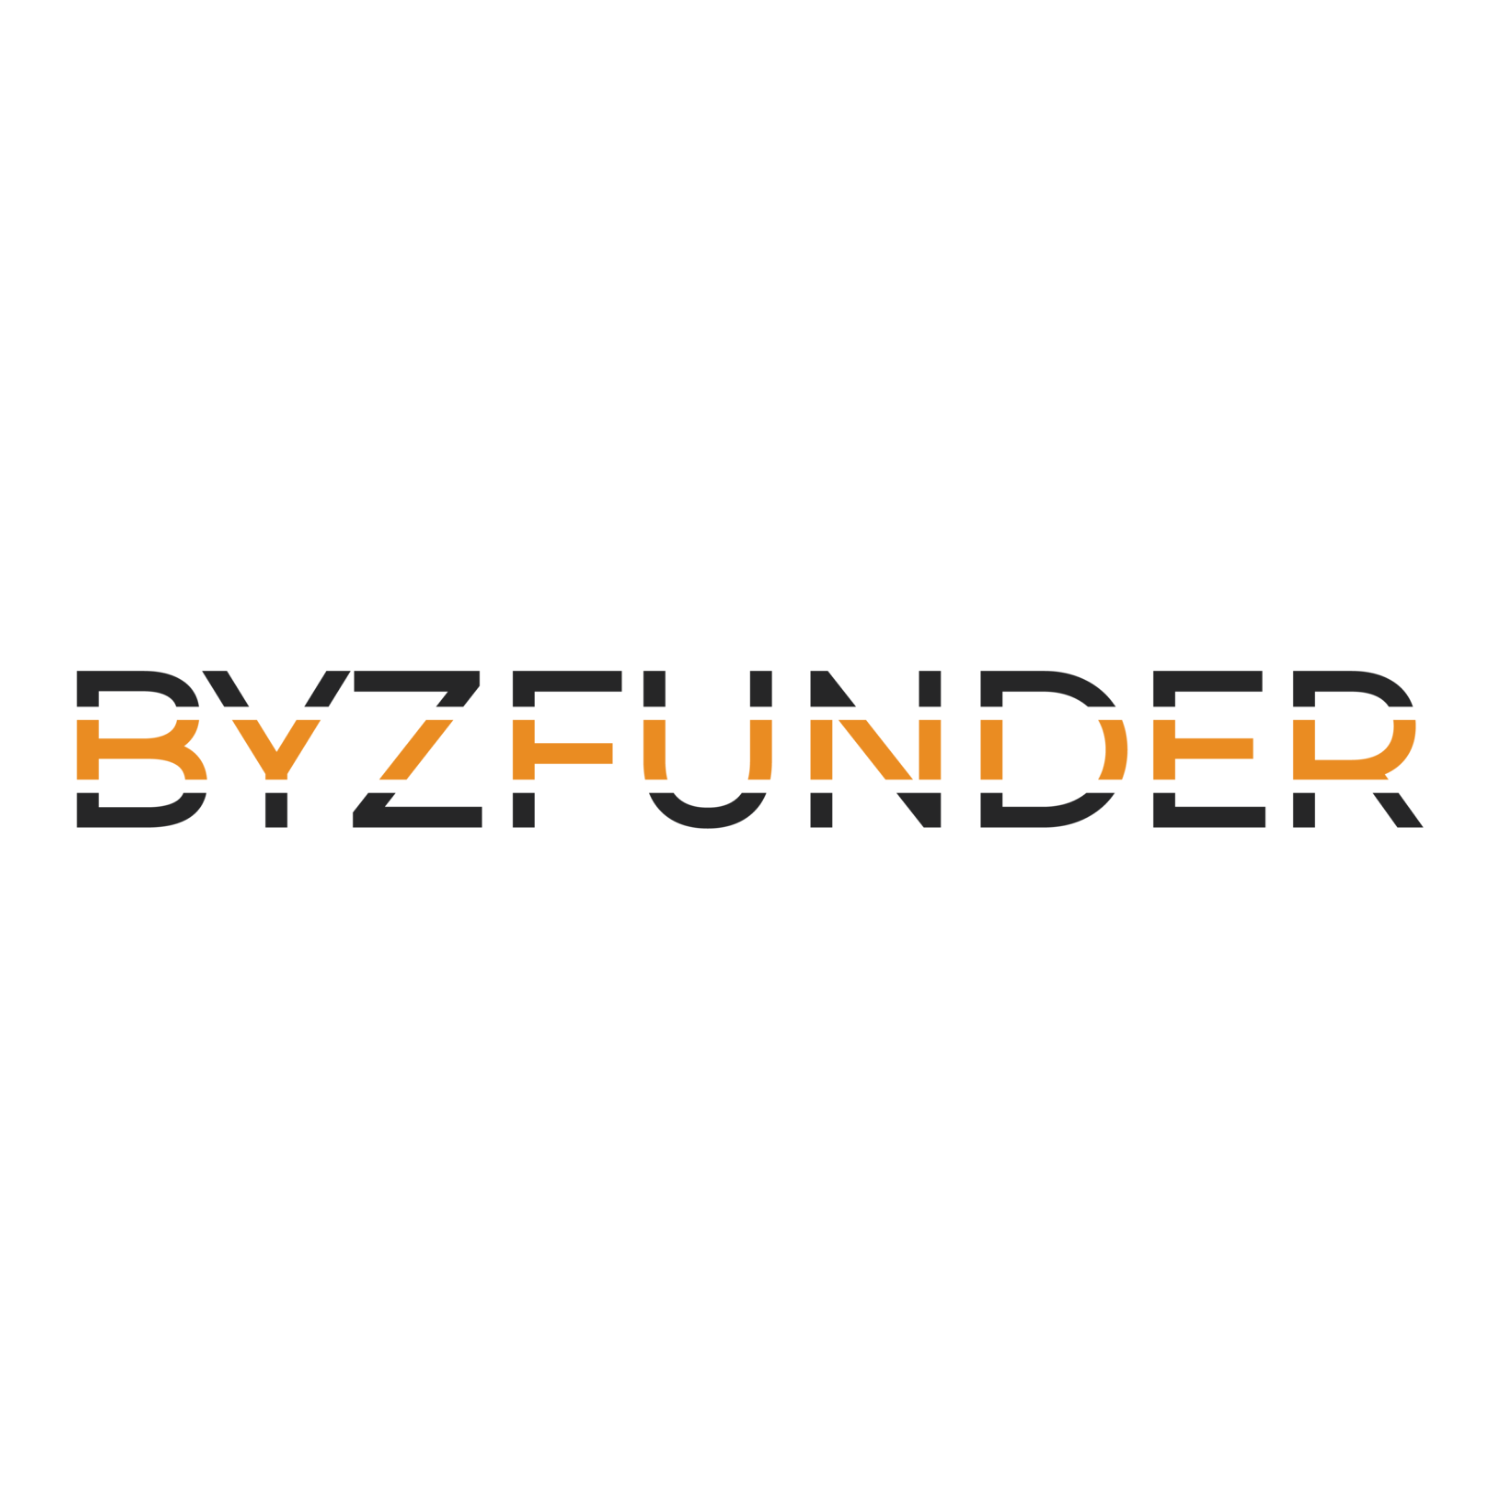 ByzFunder